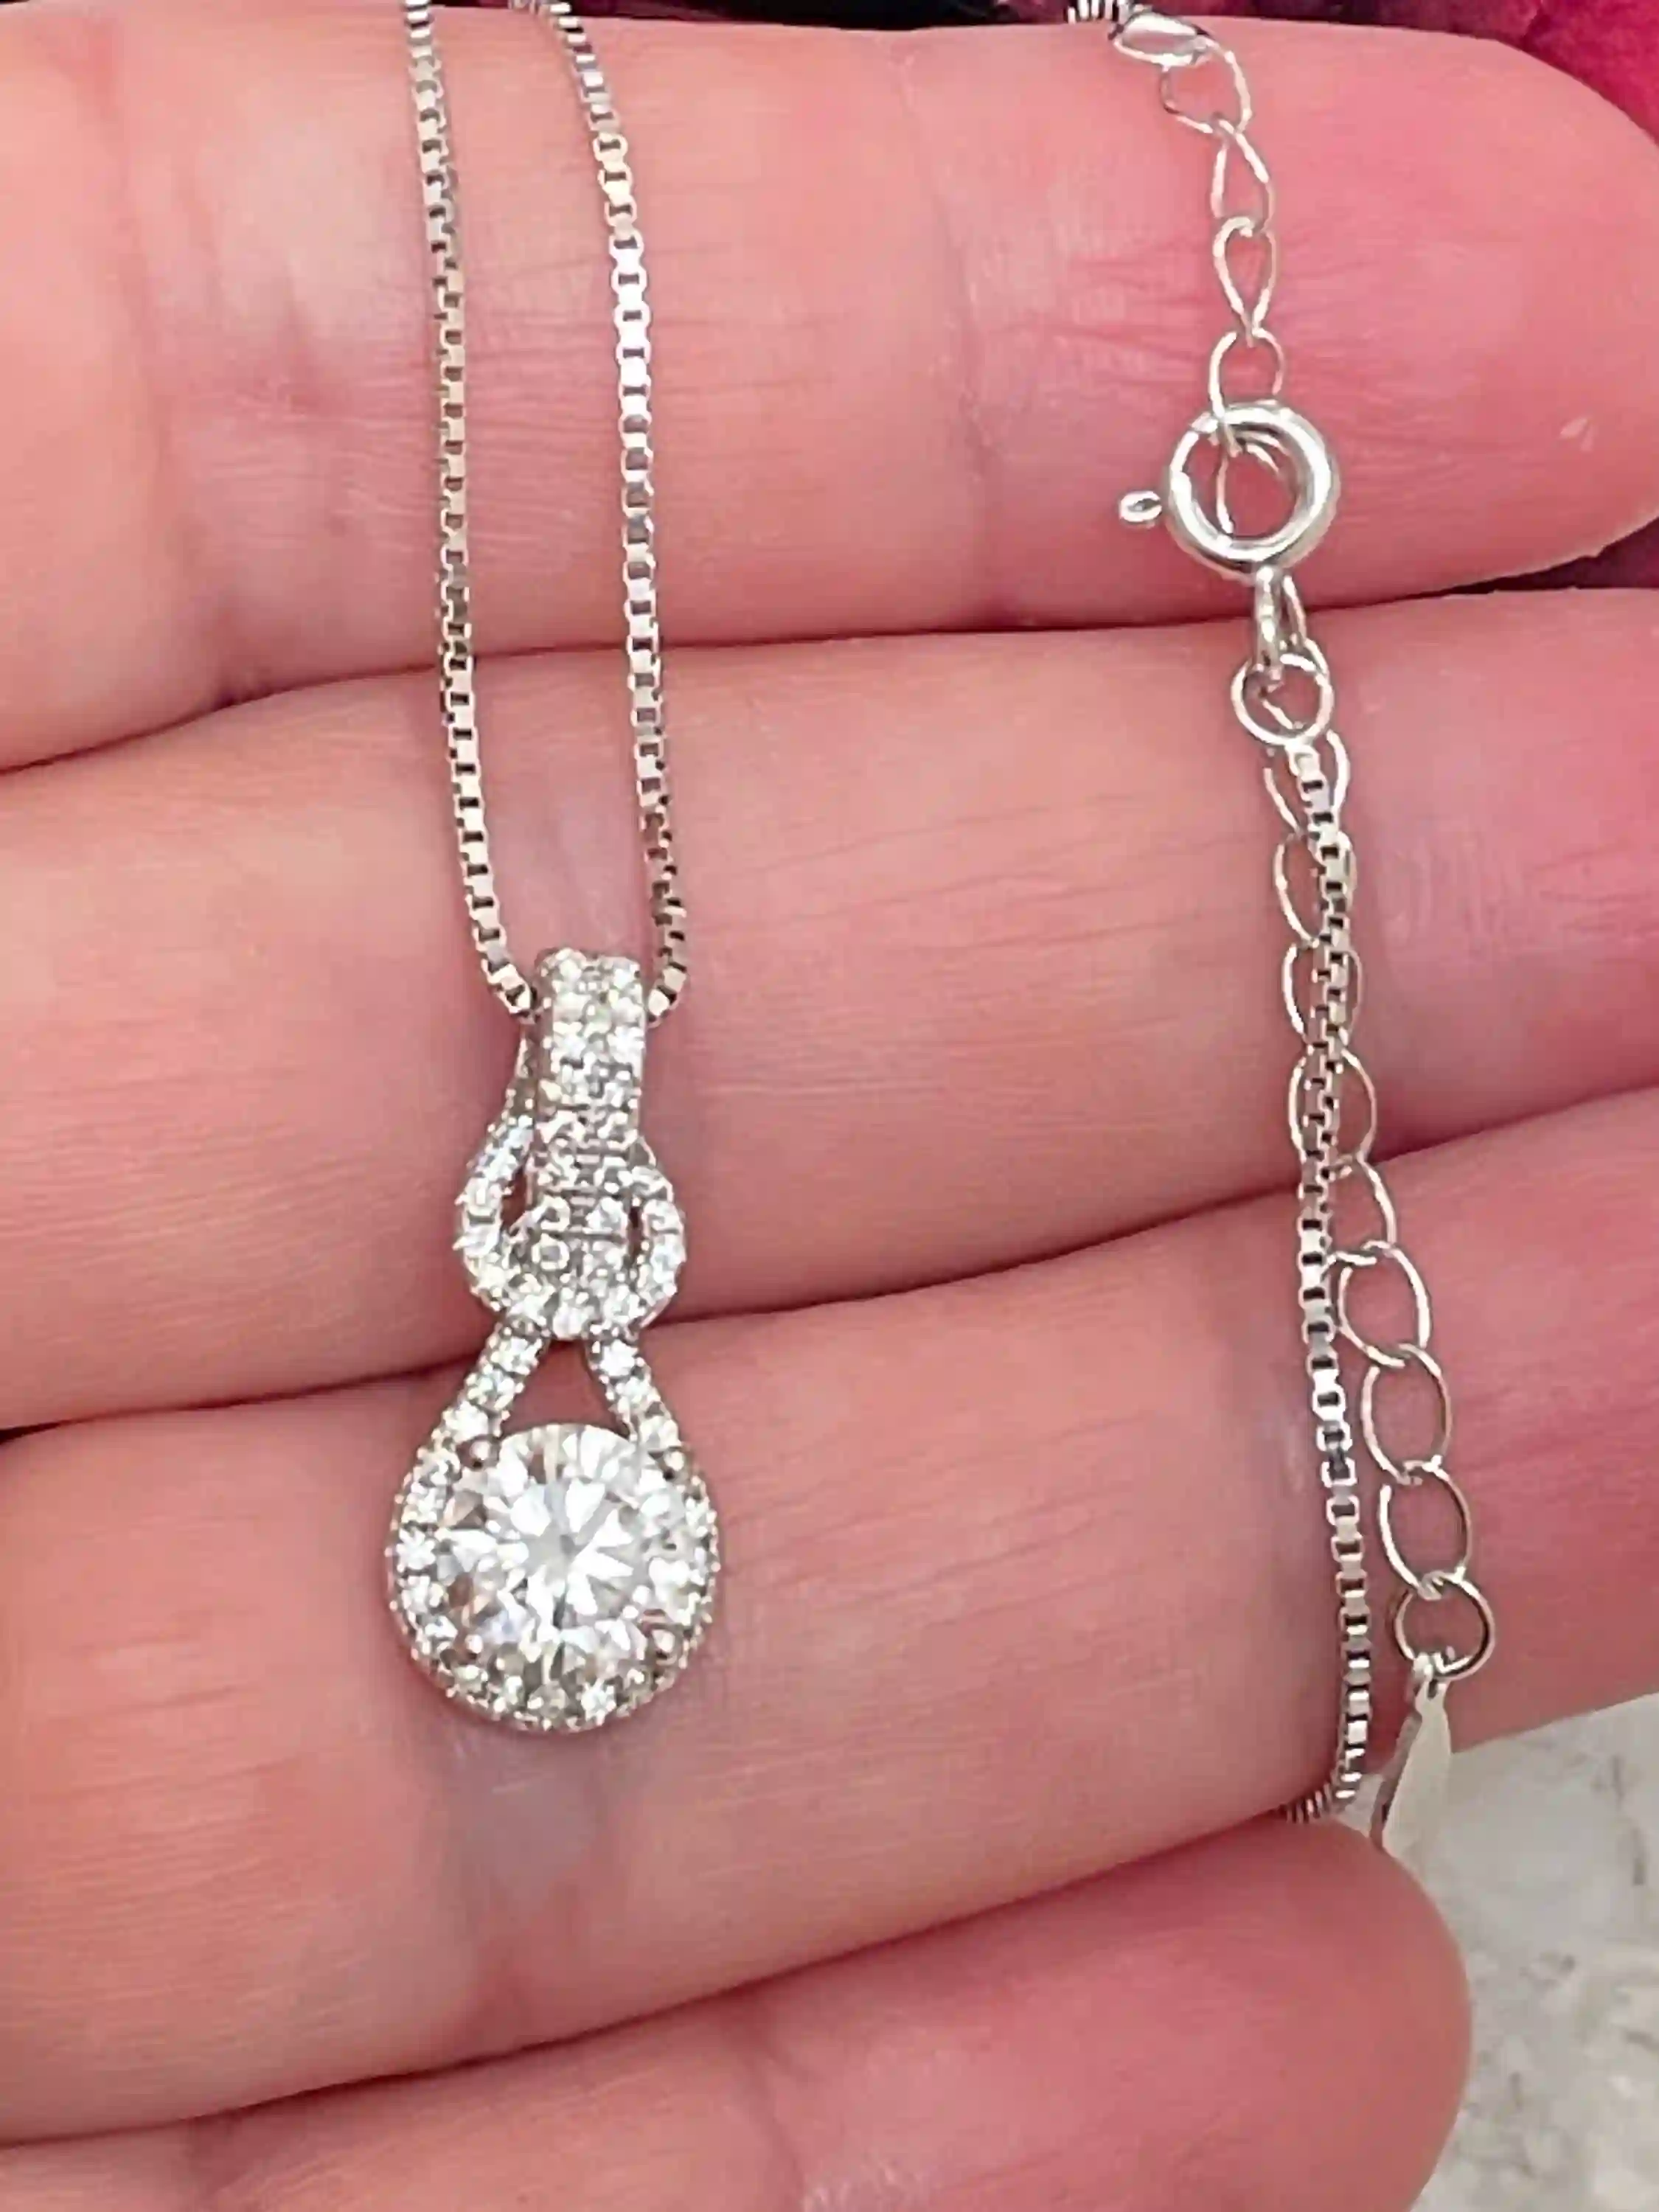 1.25ct Diamond Necklace GORDION KNOT Solitaire Diamond Pendant Necklace Handmade Jewelry White Gold Vmel Certifed Diamond Women Success LUCK 